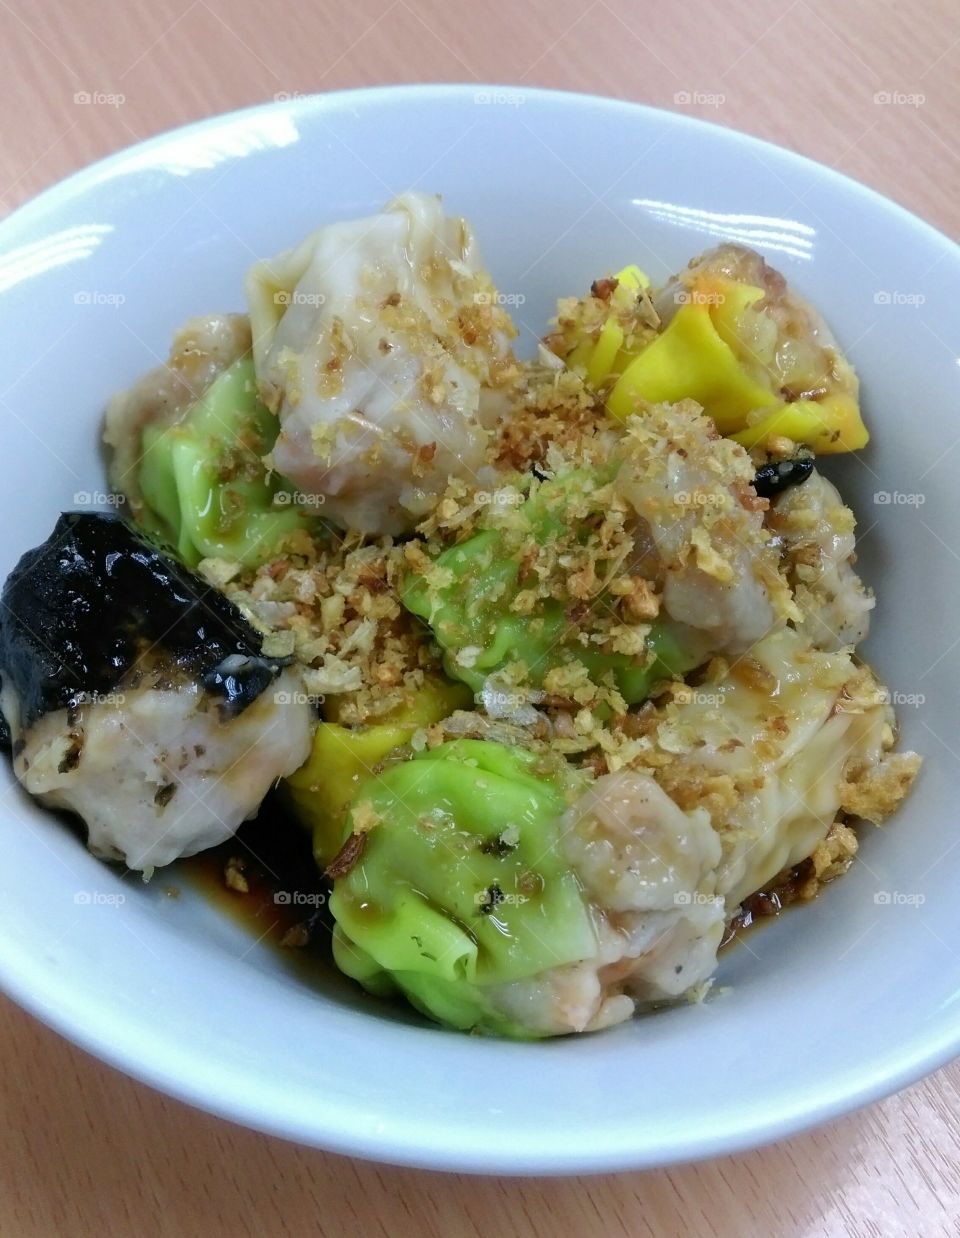 Shrimp and pork dumpling on plate